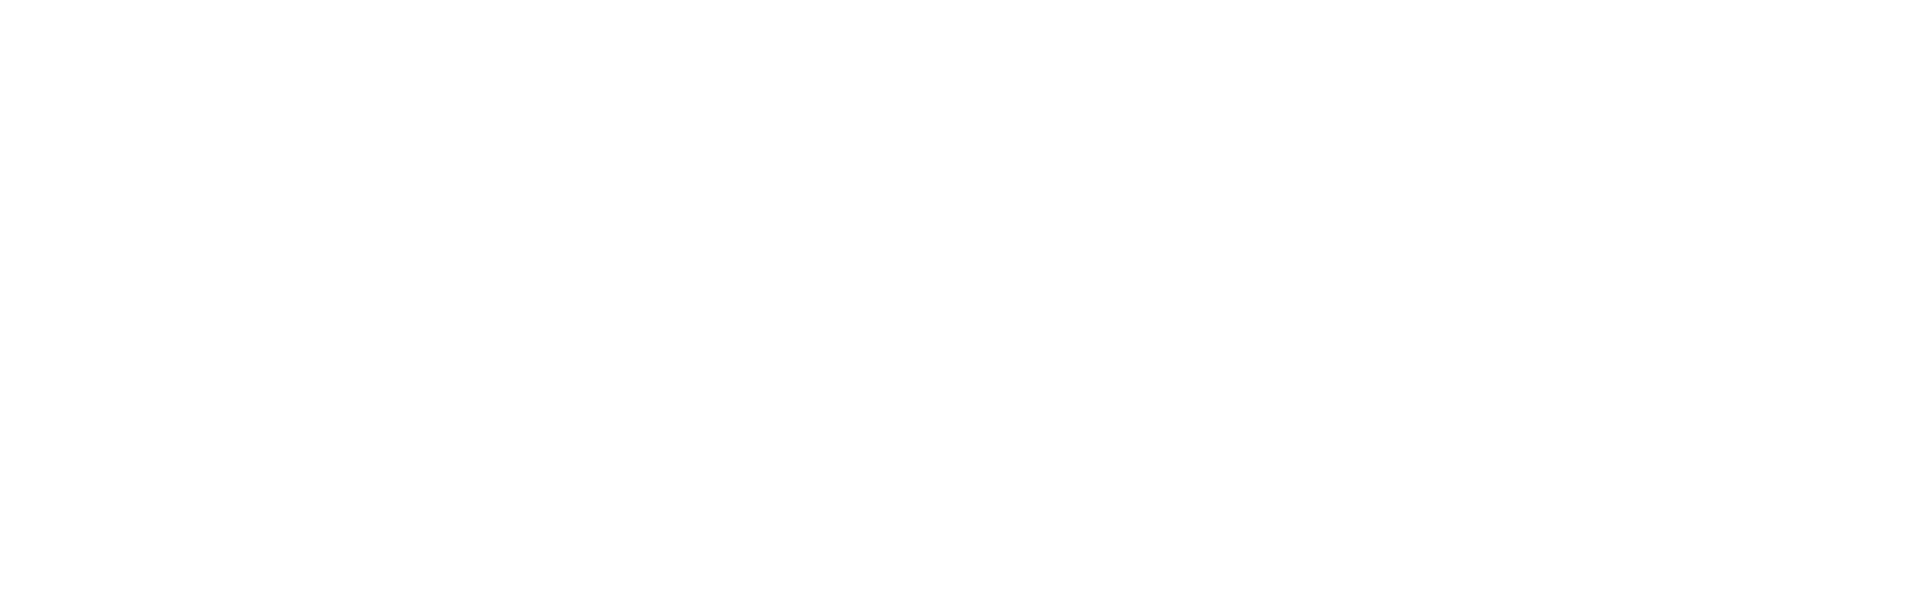 Nameless, 2-3-4 June Lake Como